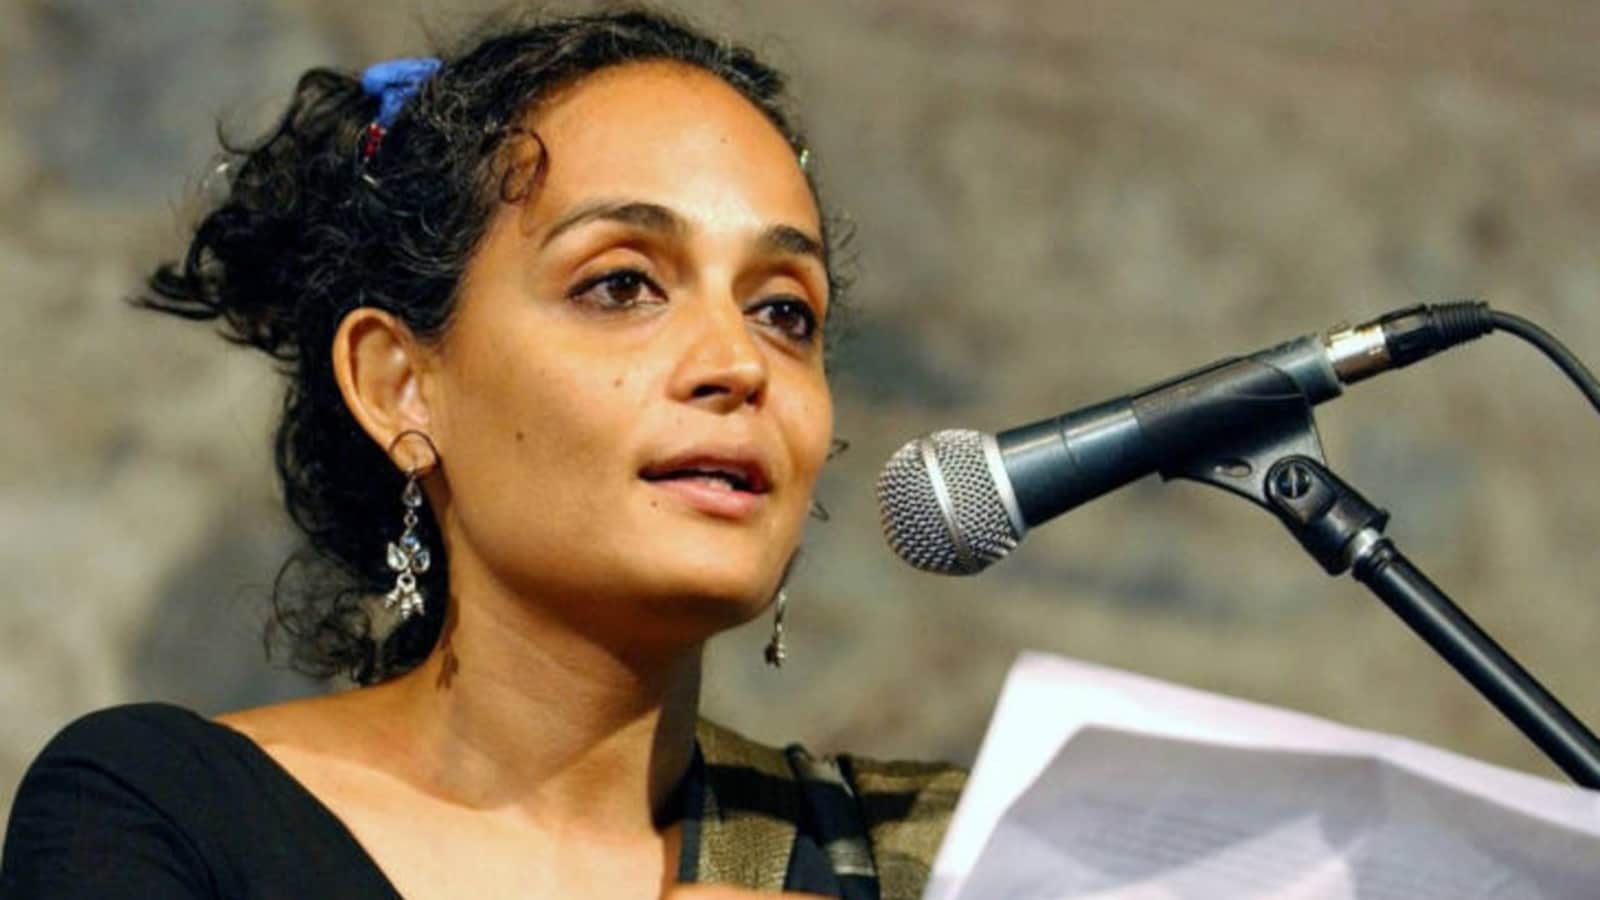 Author Arundhati Roy faces prosecution in India over 2010 speech